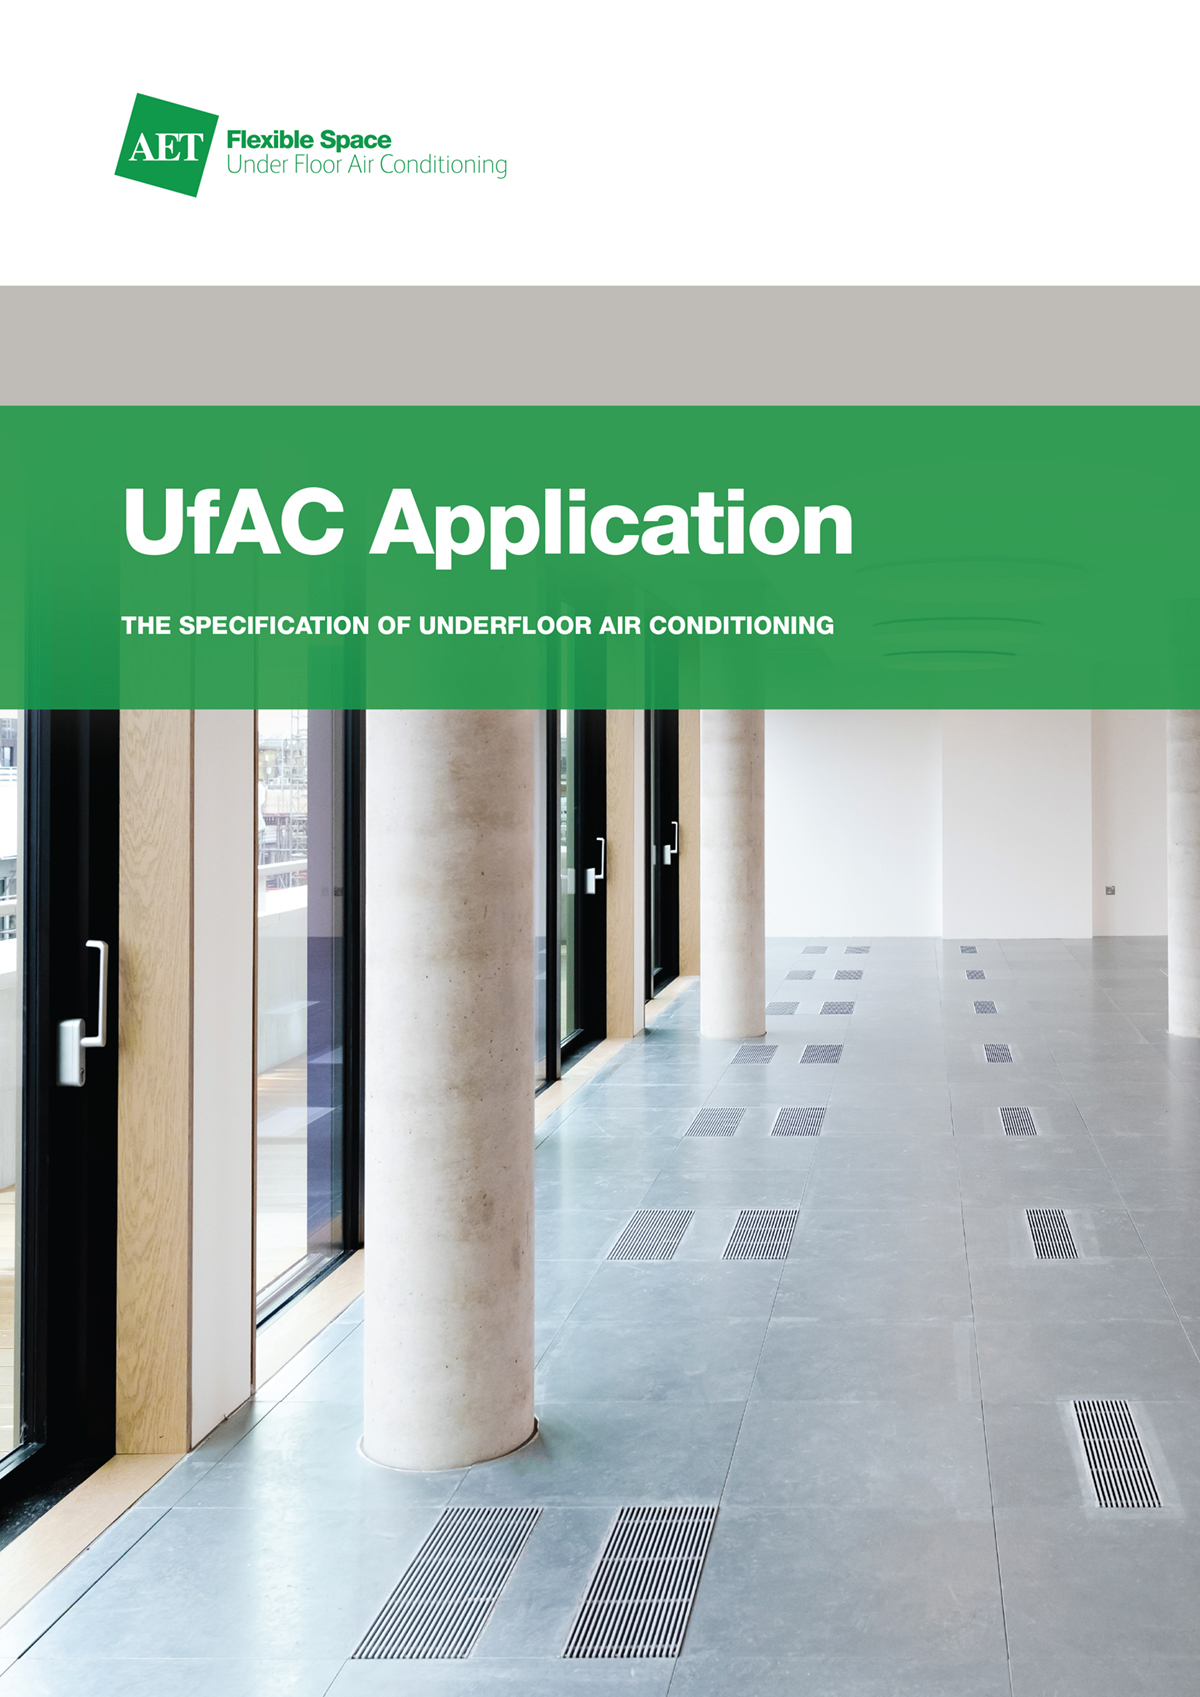 UfAC Applications